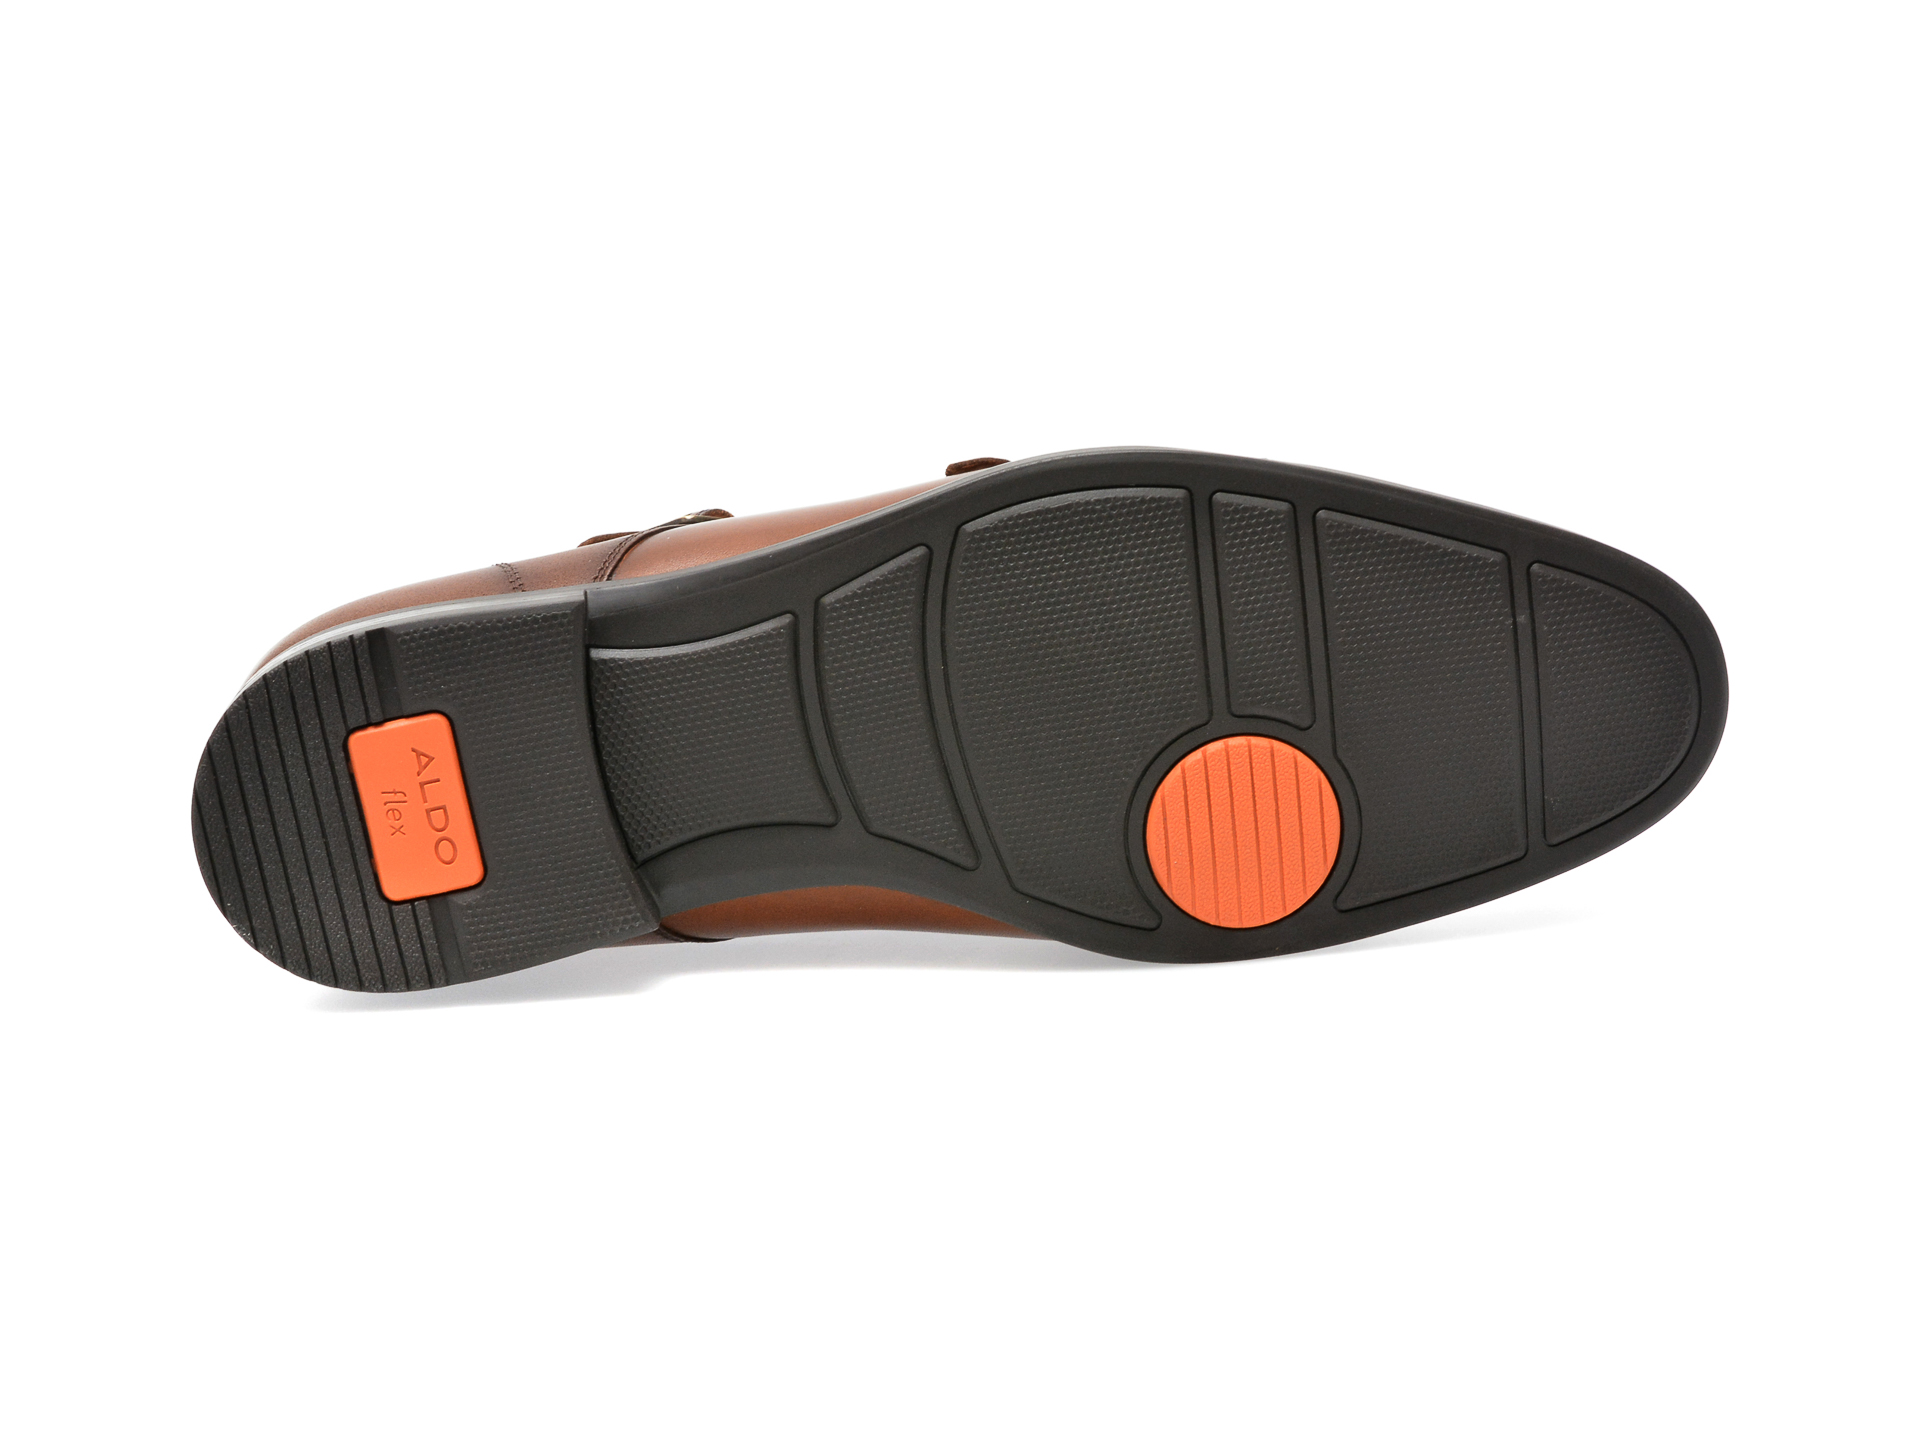 Pantofi ALDO maro, HOLTLANFLEX220, din piele naturala